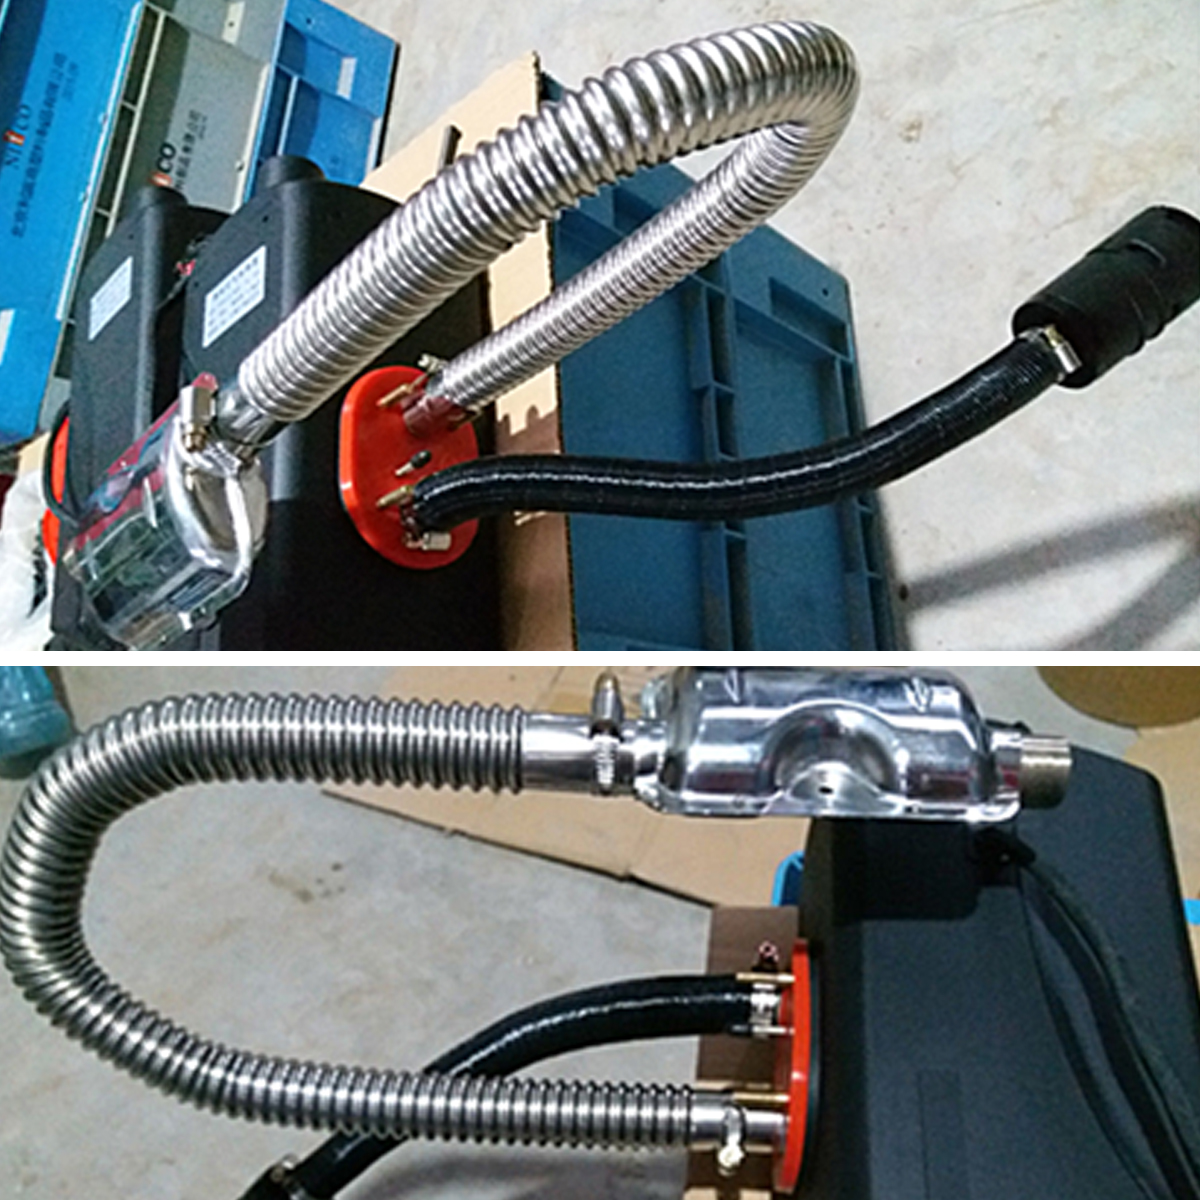 Car Parking Air Heater Tank Exhaust Pipe Diesel Gas Vent Hose Stainless Steel Tube